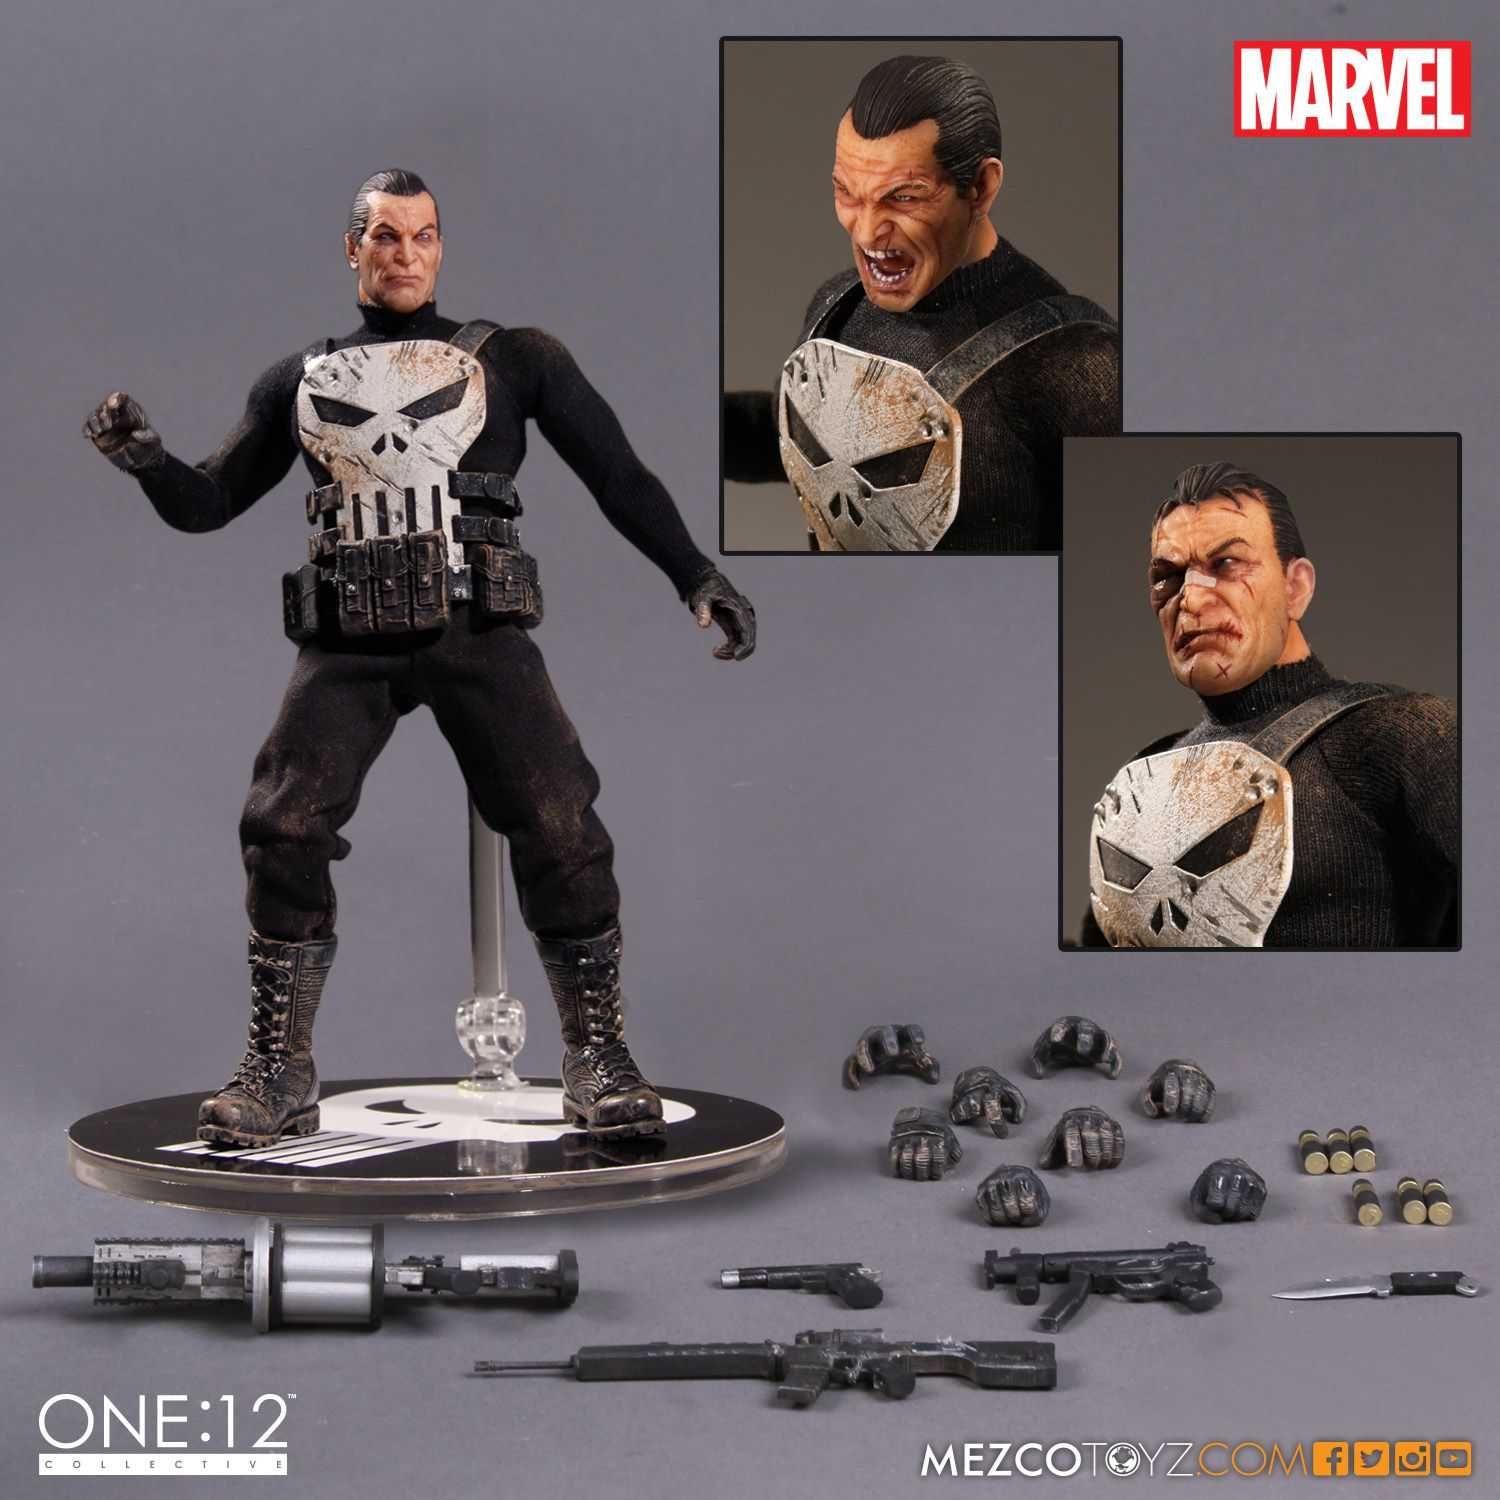 Mezco 1:12 Figurina Articulata Marvel Punisher Previews Exclusive